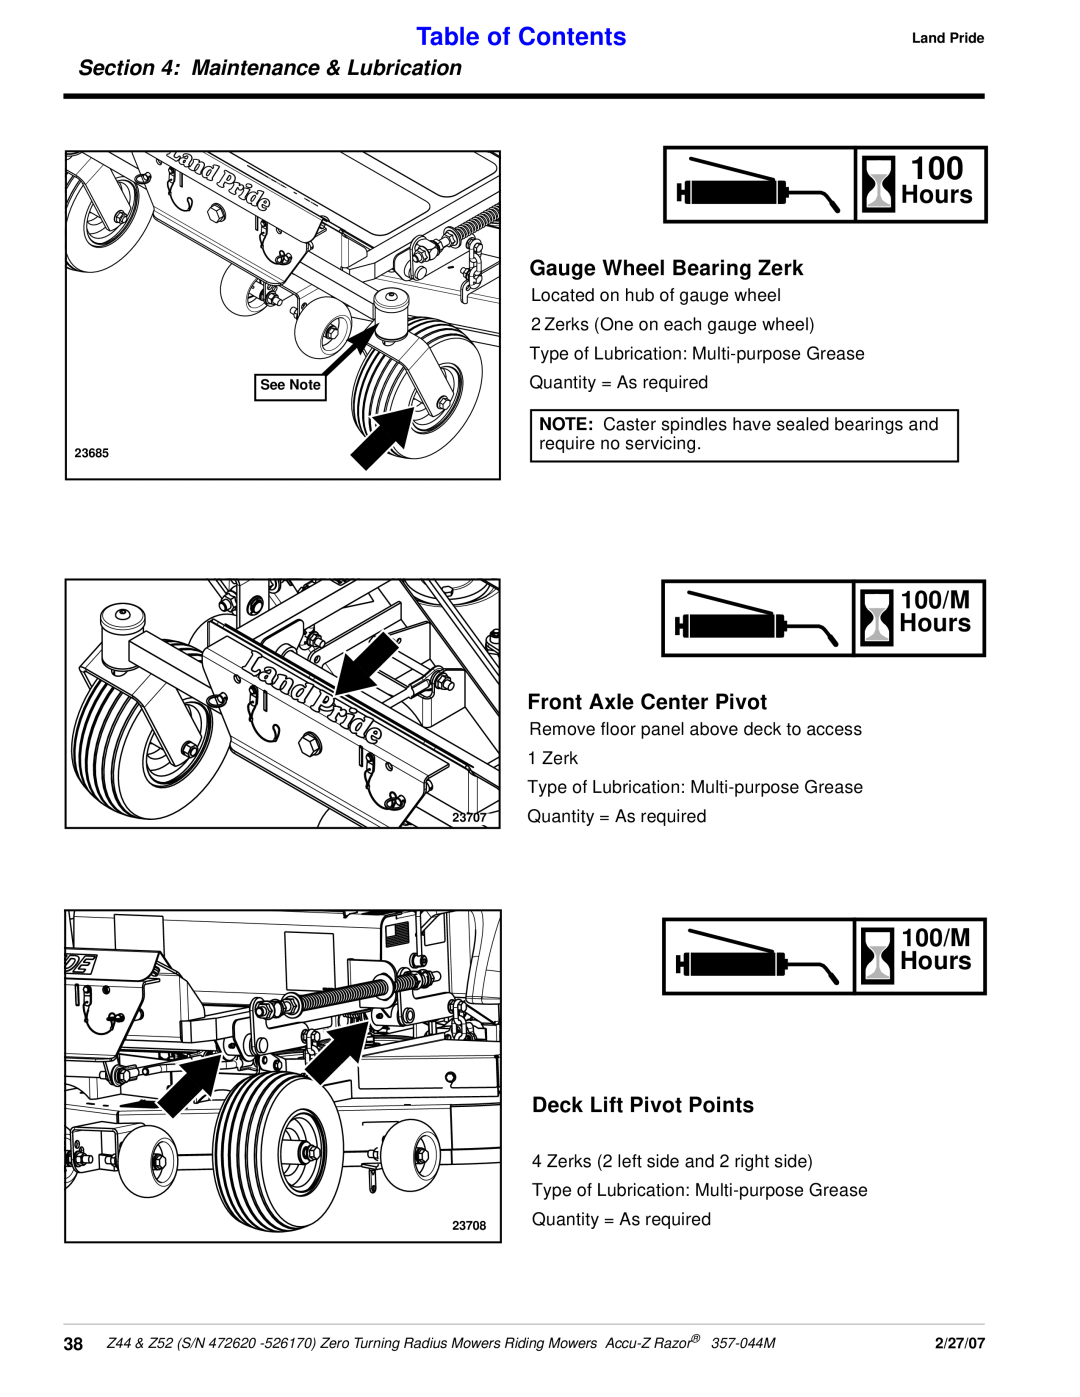 Land Pride 357-044M manual 100/M Hours, Gauge Wheel Bearing Zerk, Front Axle Center Pivot, Deck Lift Pivot Points 